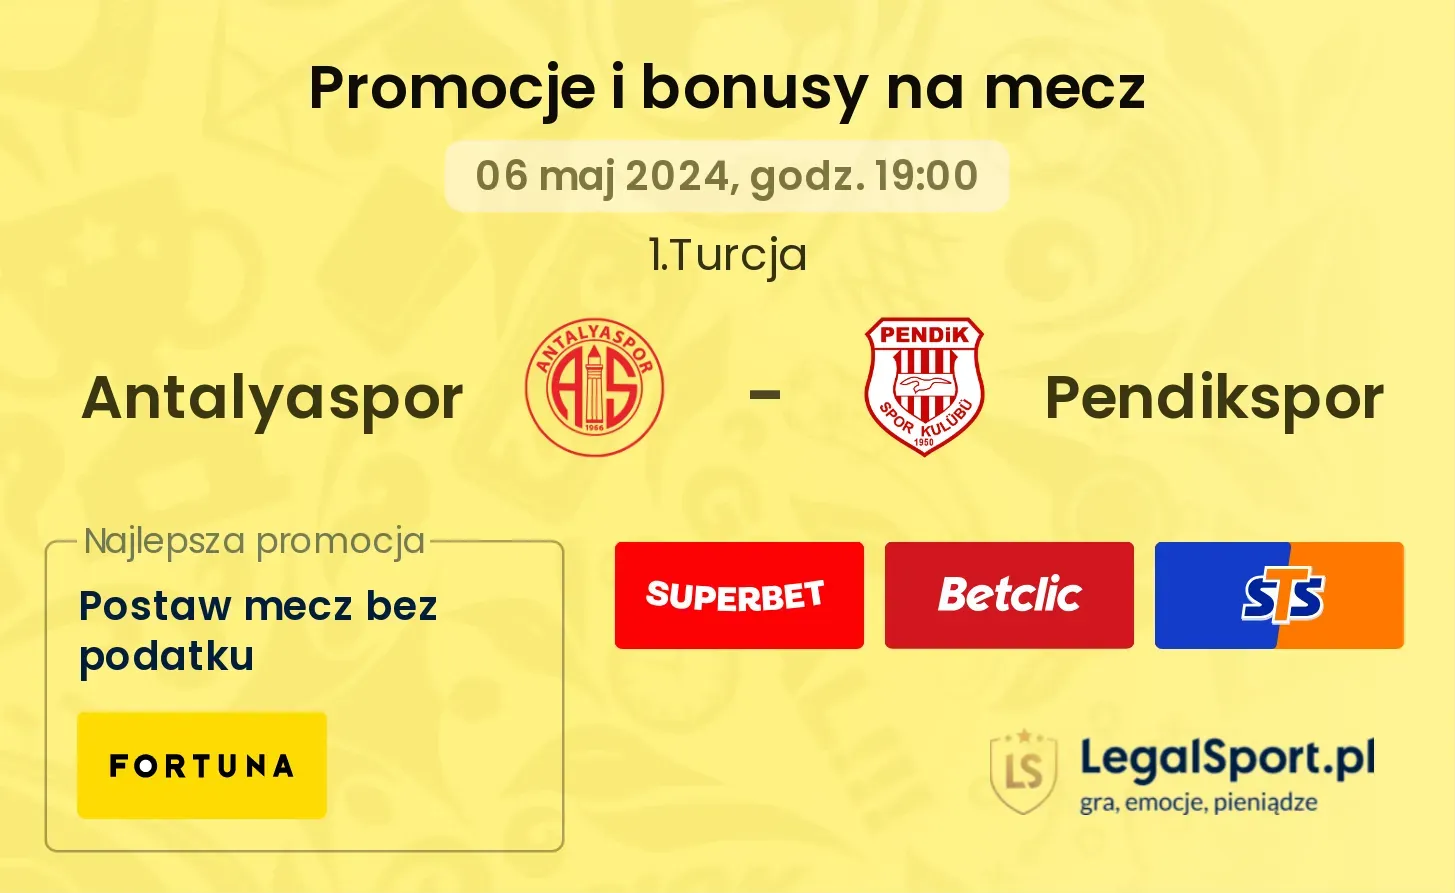 Antalyaspor - Pendikspor promocje bonusy na mecz